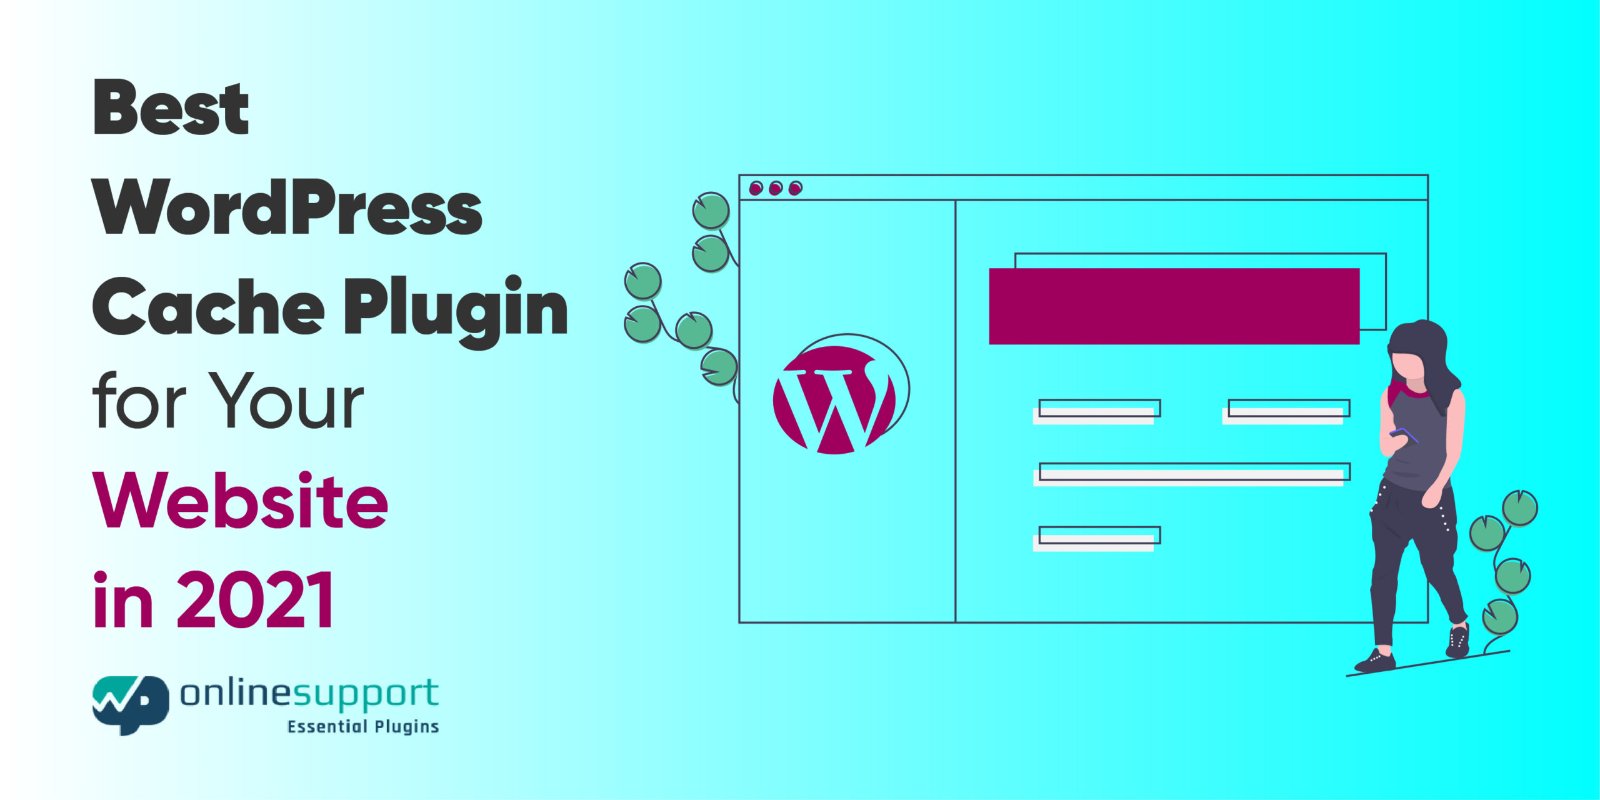 Blog Best WordPress Cache Plugin For your Website in 2021